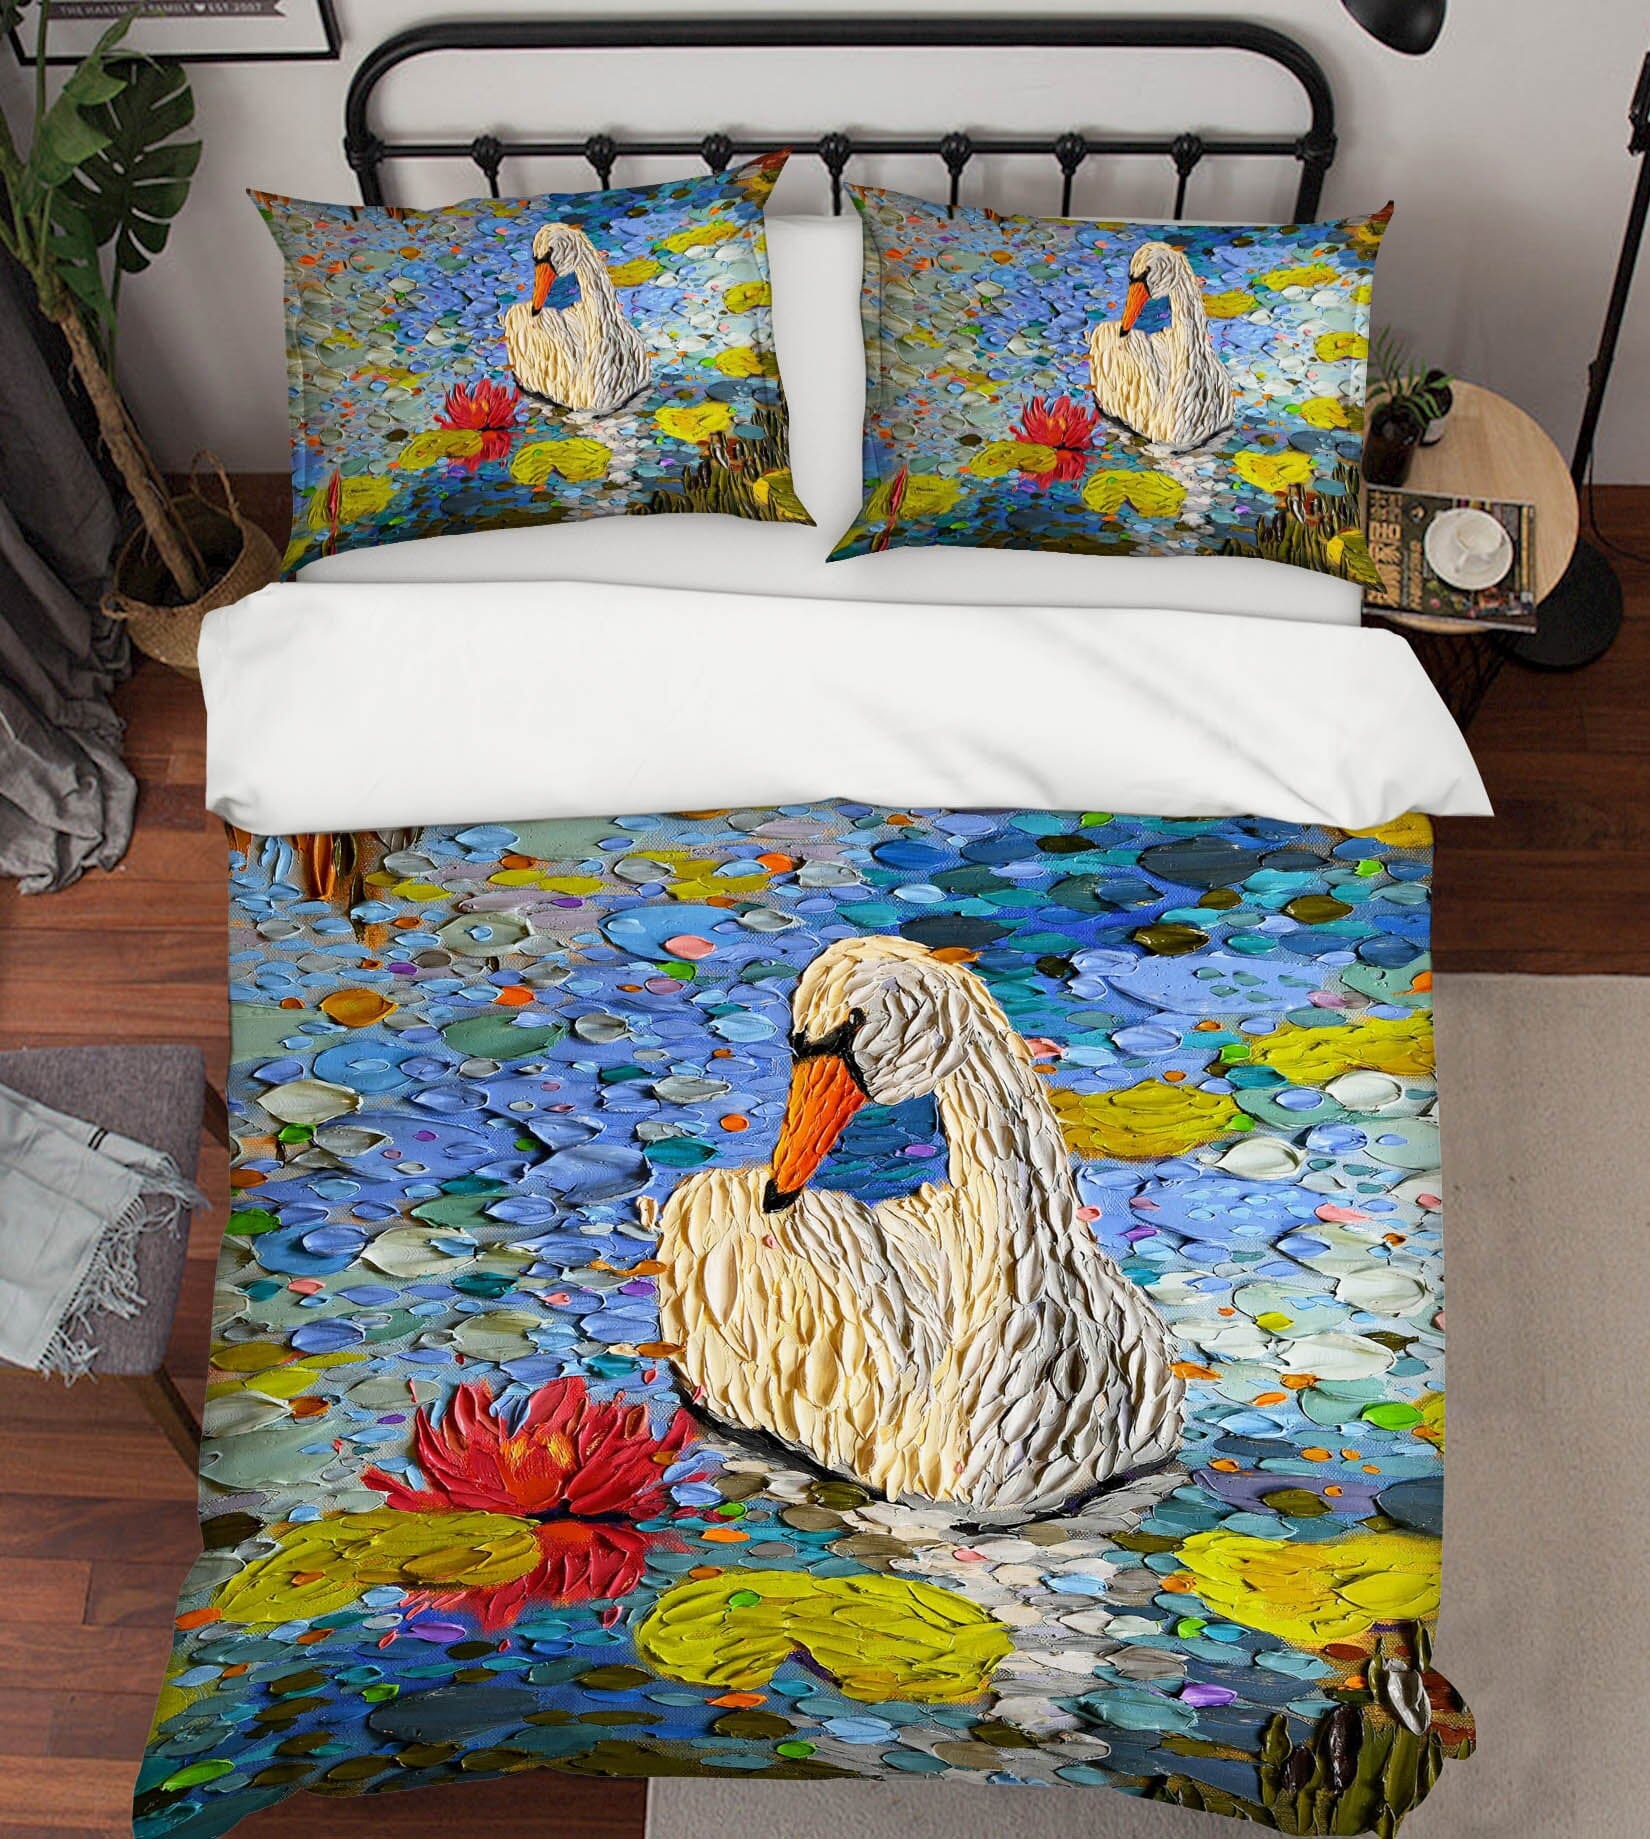 3D Spring Awakening 2119 Dena Tollefson bedding Bed Pillowcases Quilt Quiet Covers AJ Creativity Home 